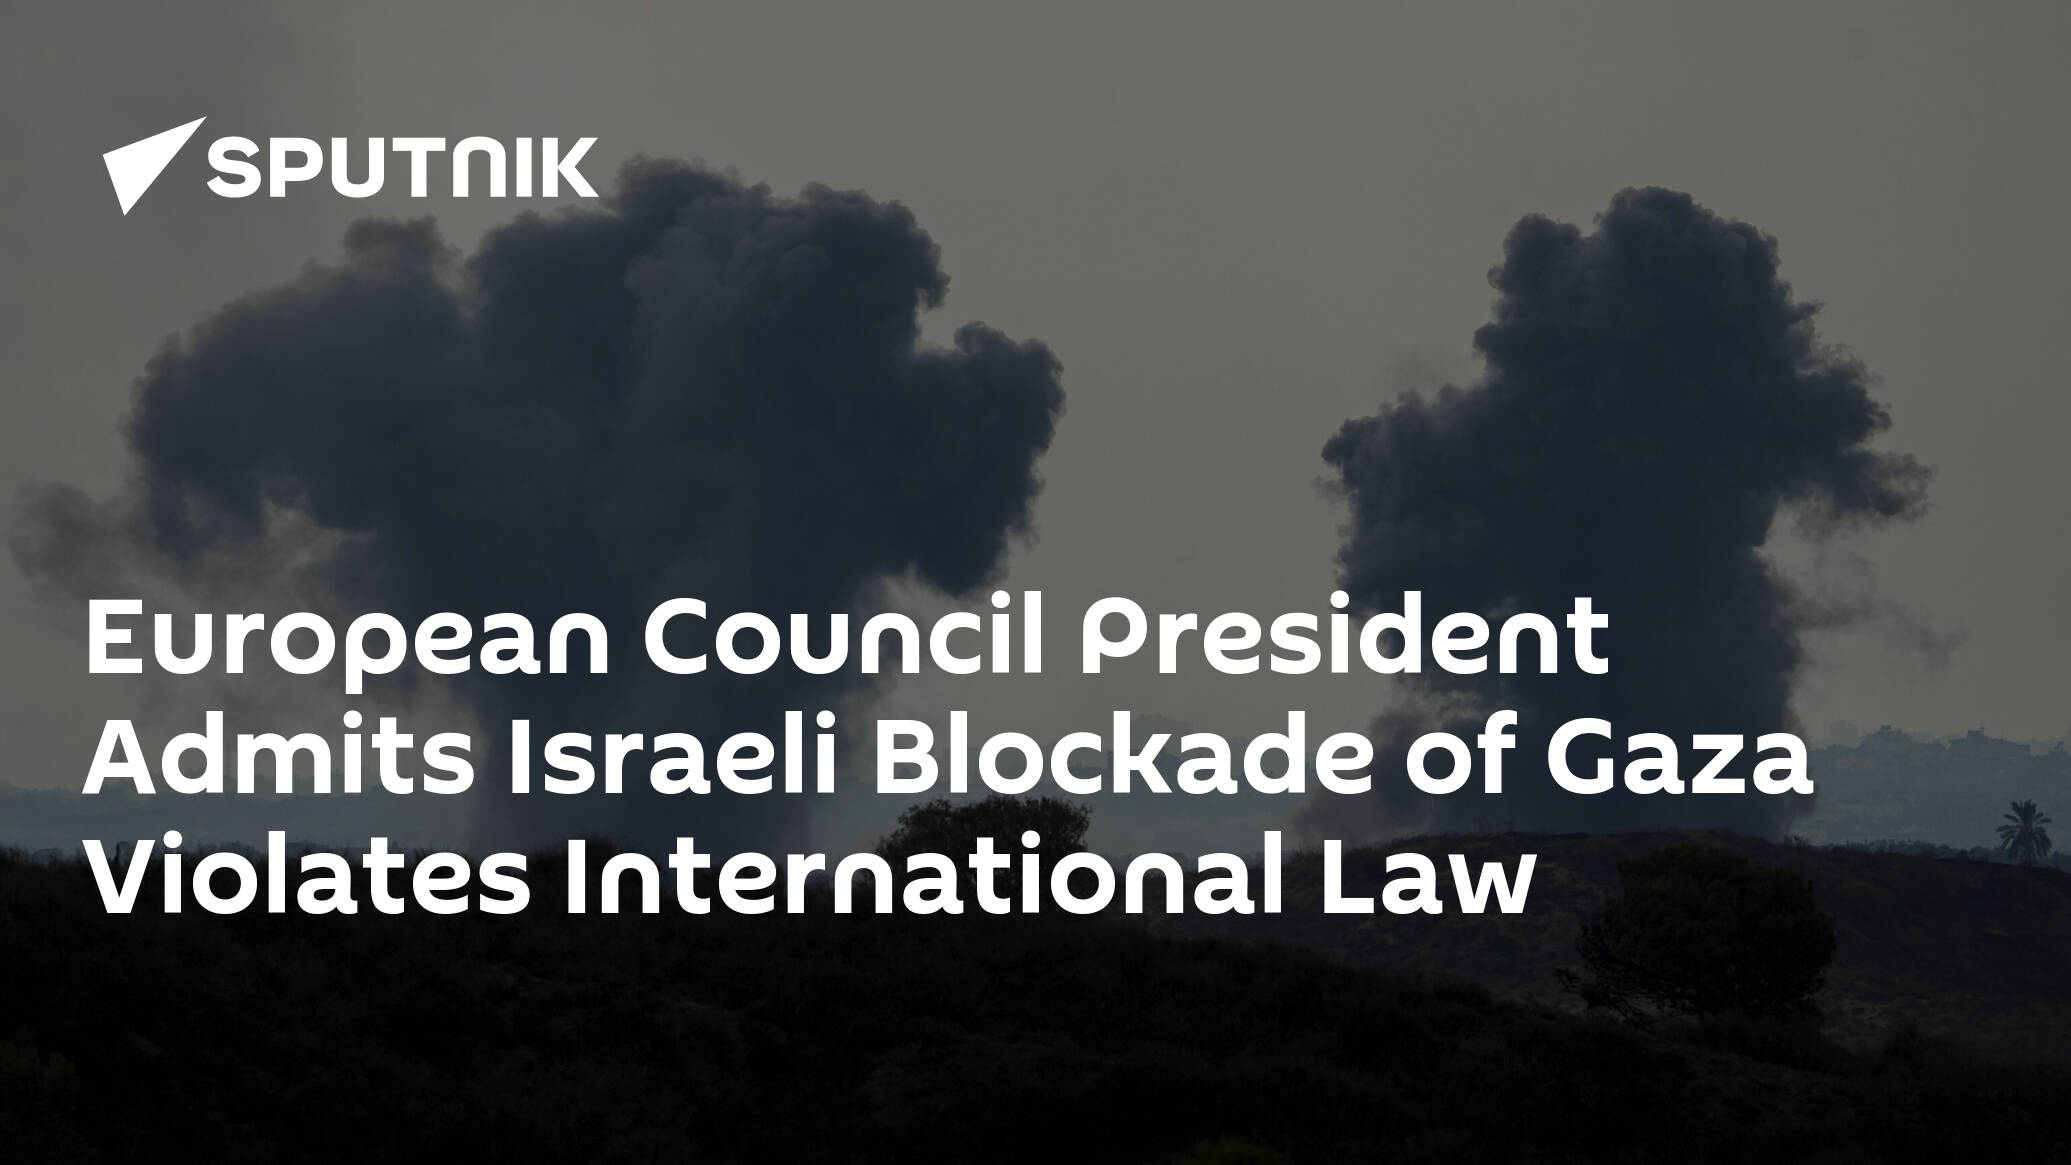 European Council President Admits Israeli Blockade of Gaza Violates International Law